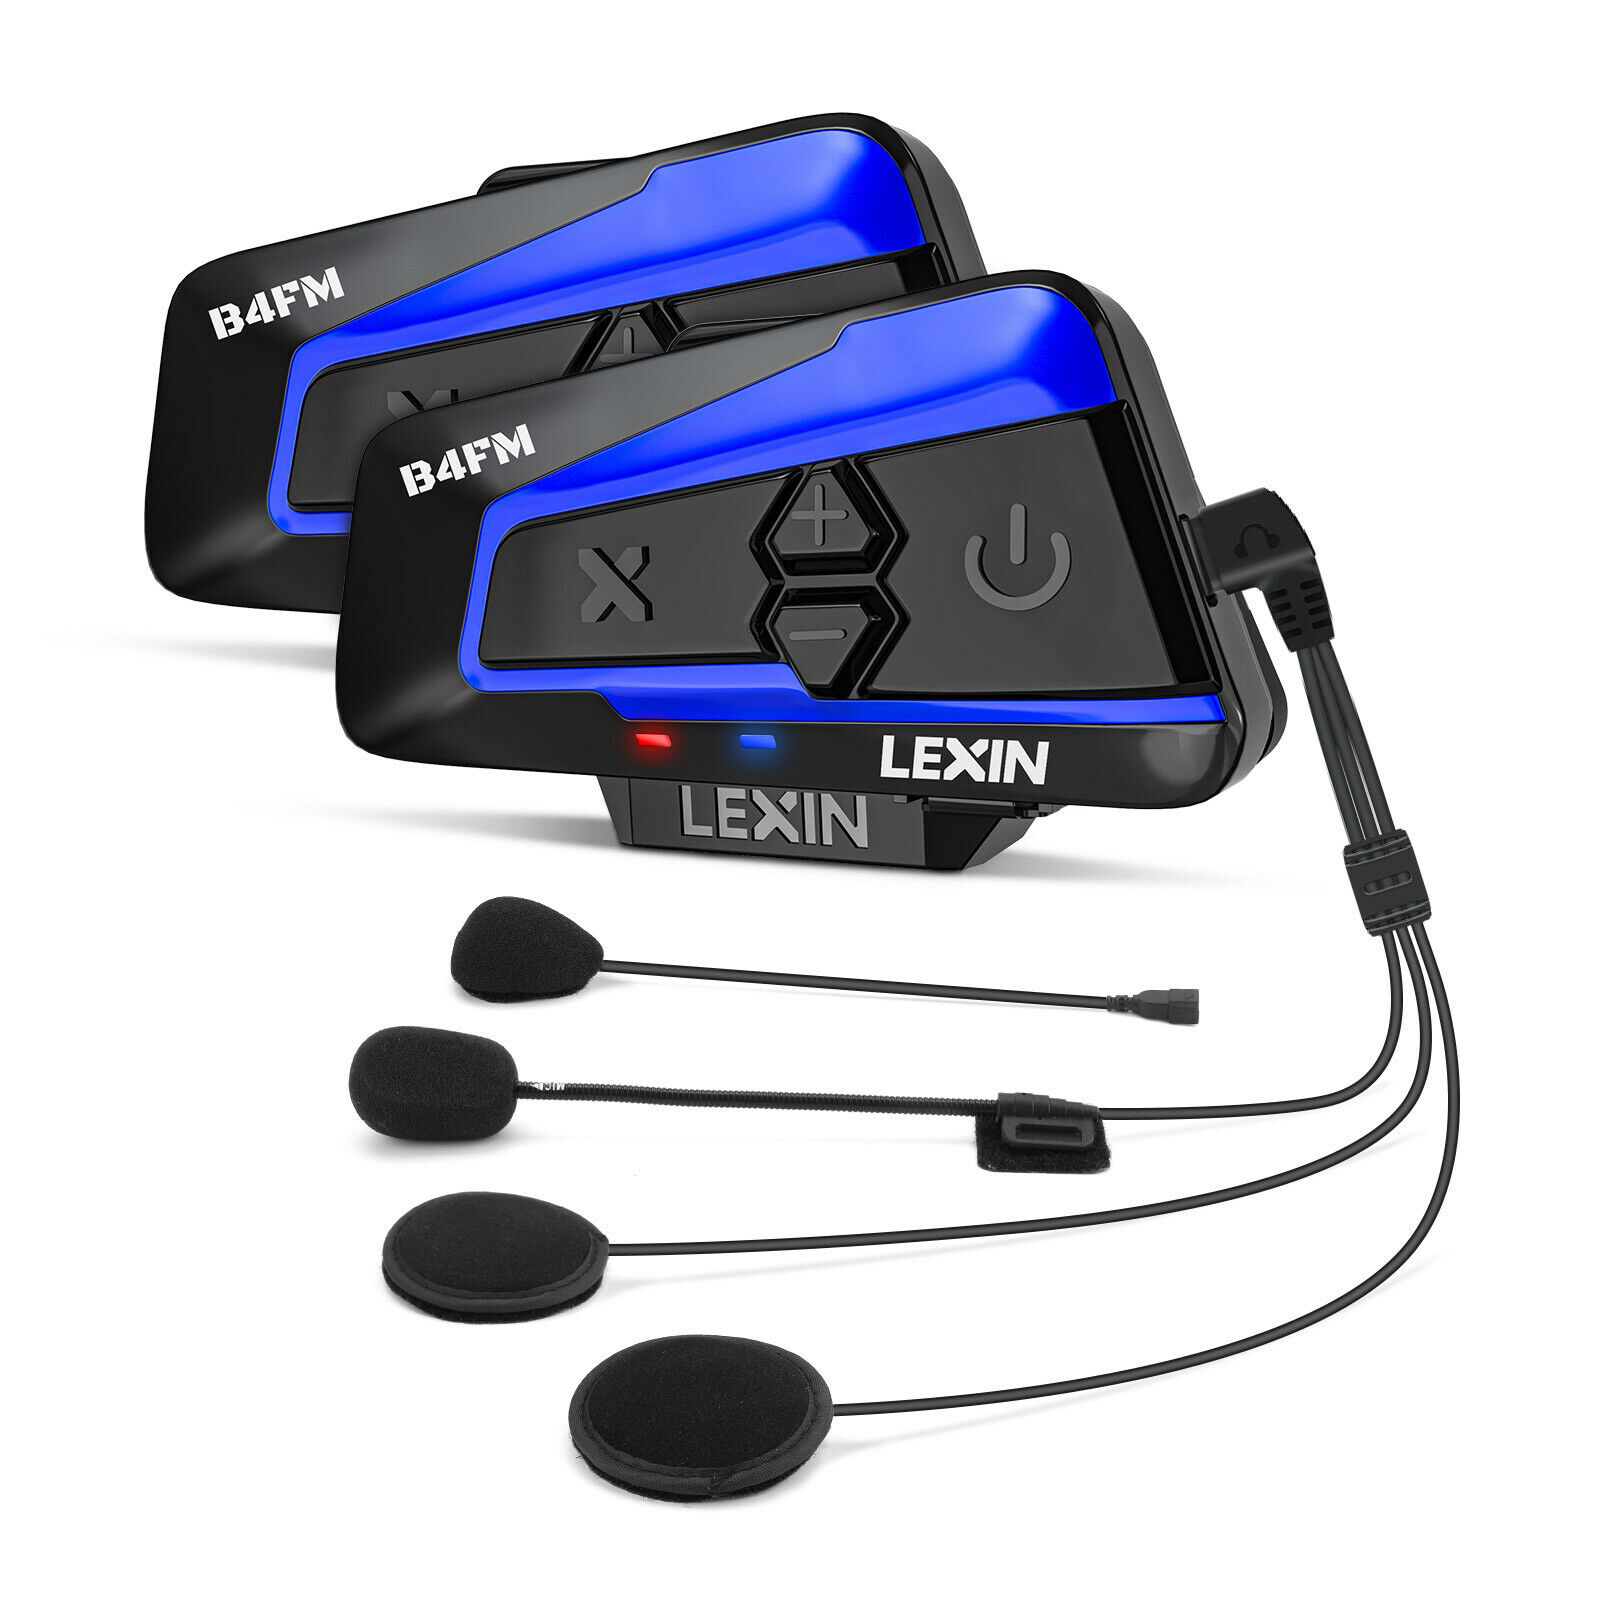 2 LEXIN B4FM Motorcycle Helmet Bluetooth Headset Intercom 10 Rider & Music share